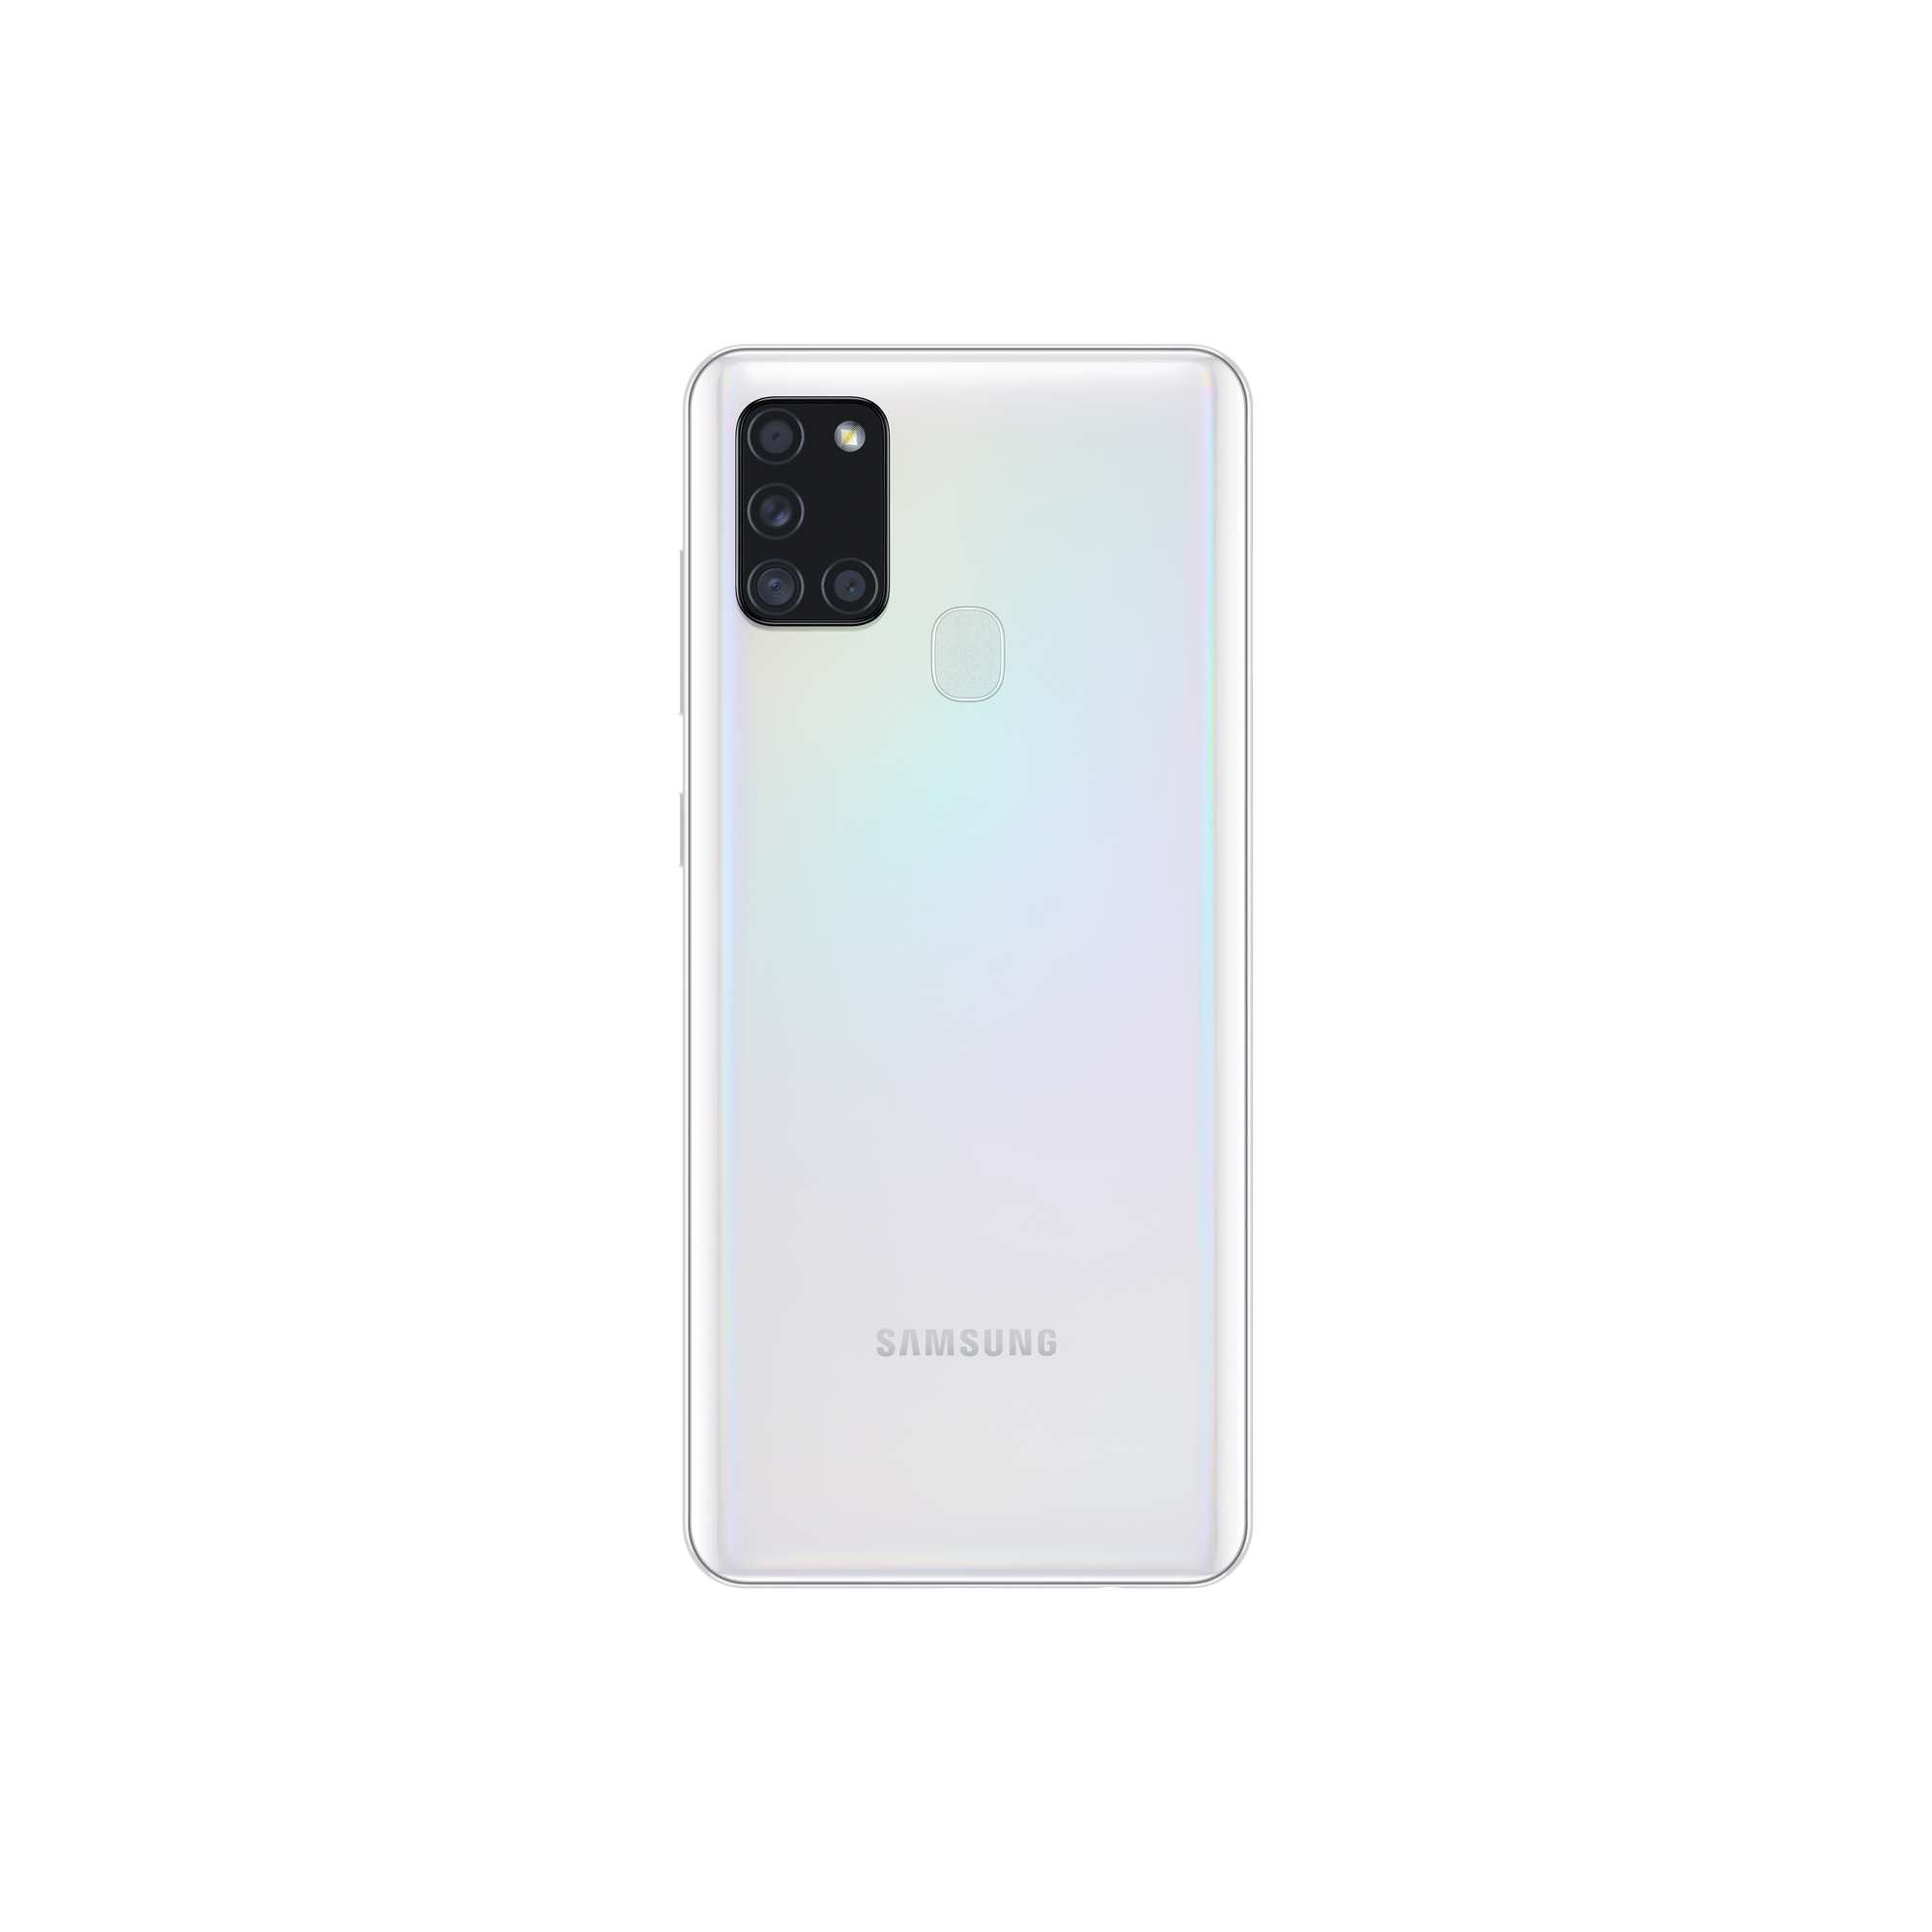 Samsung Galaxy A21s Beyaz Android Telefon Modelleri